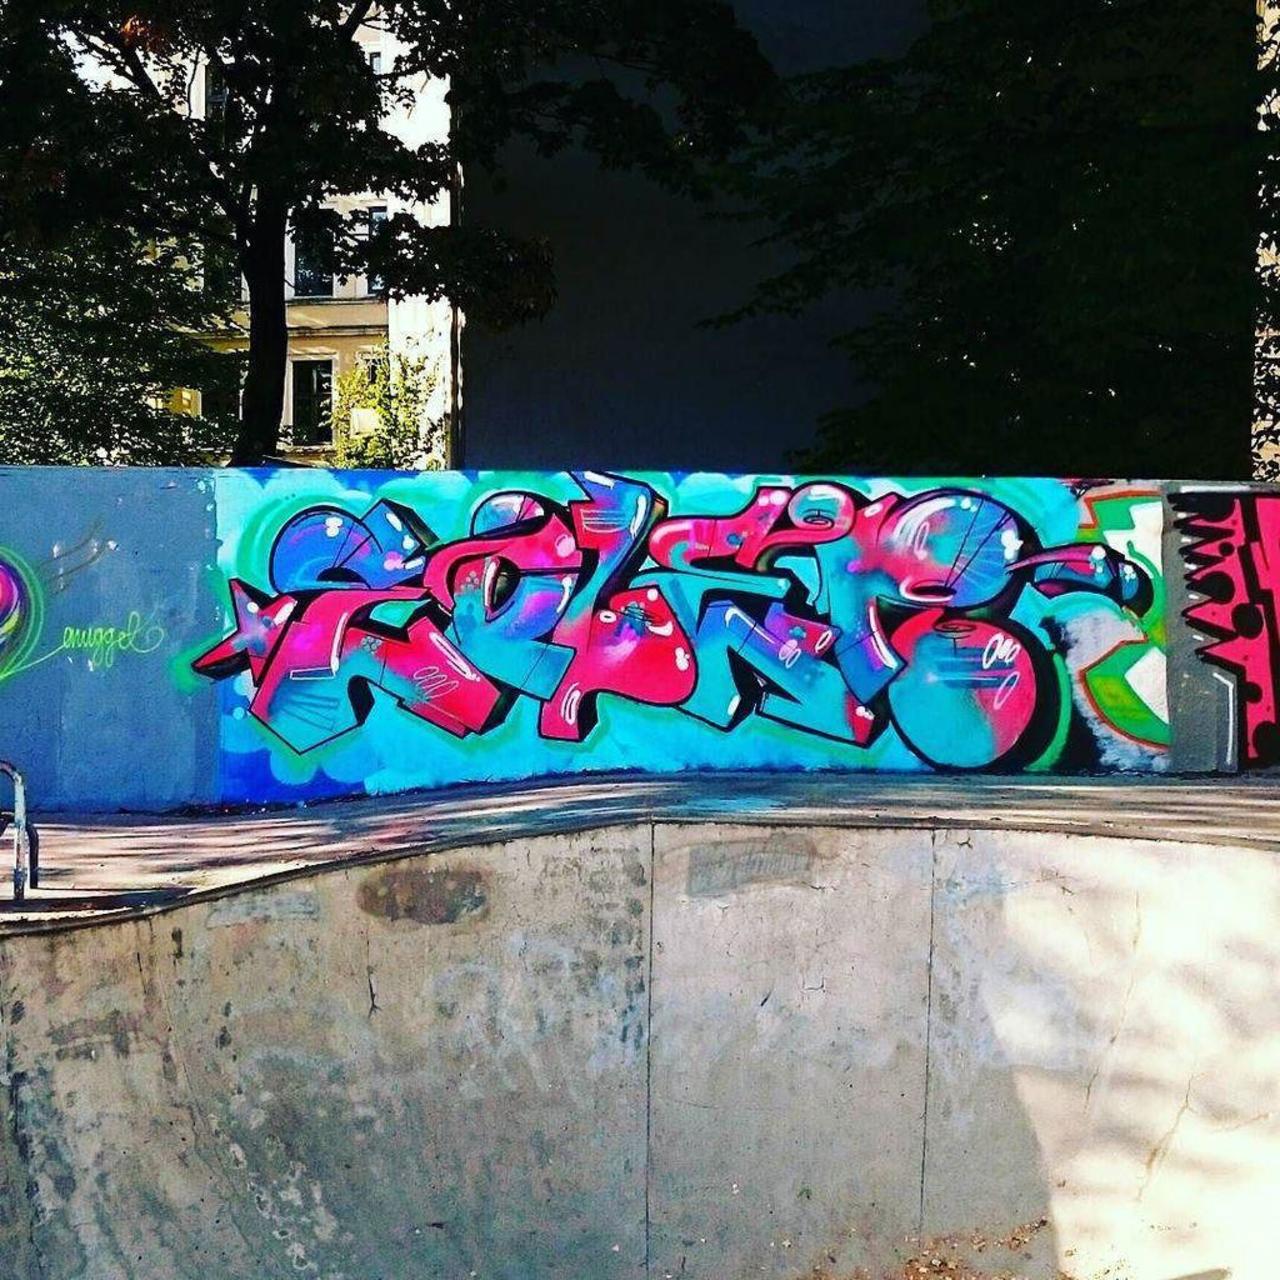 via #edler.one "http://bit.ly/1OcWQT2" #graffiti #streetart http://t.co/0vpgp0cjQd